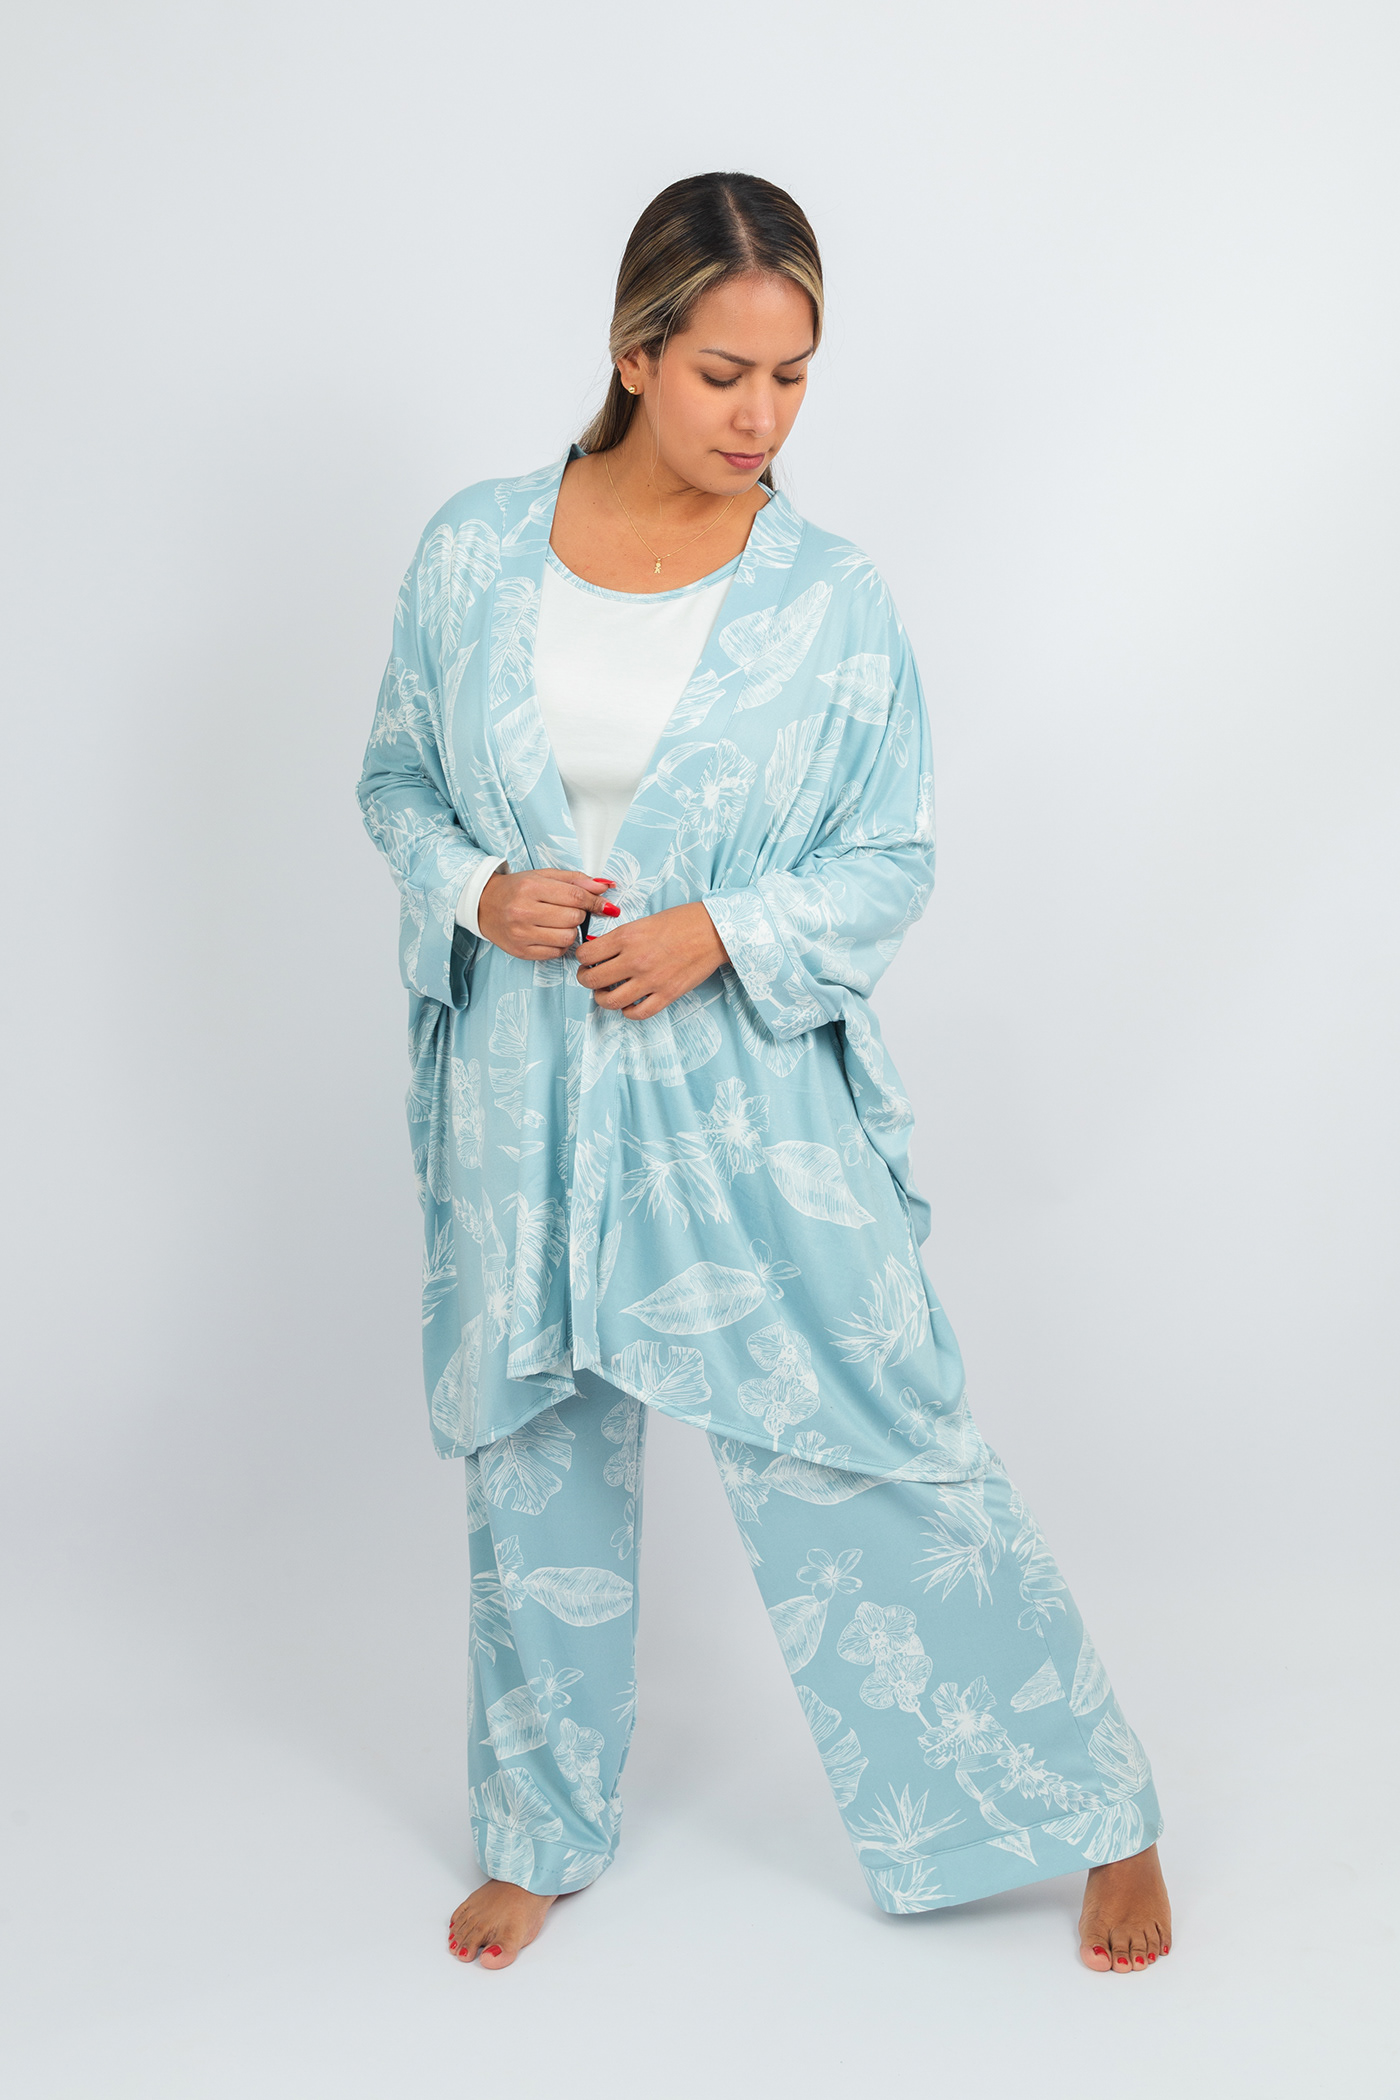 Catalogue editorial model photoshoot pijama sleepwear